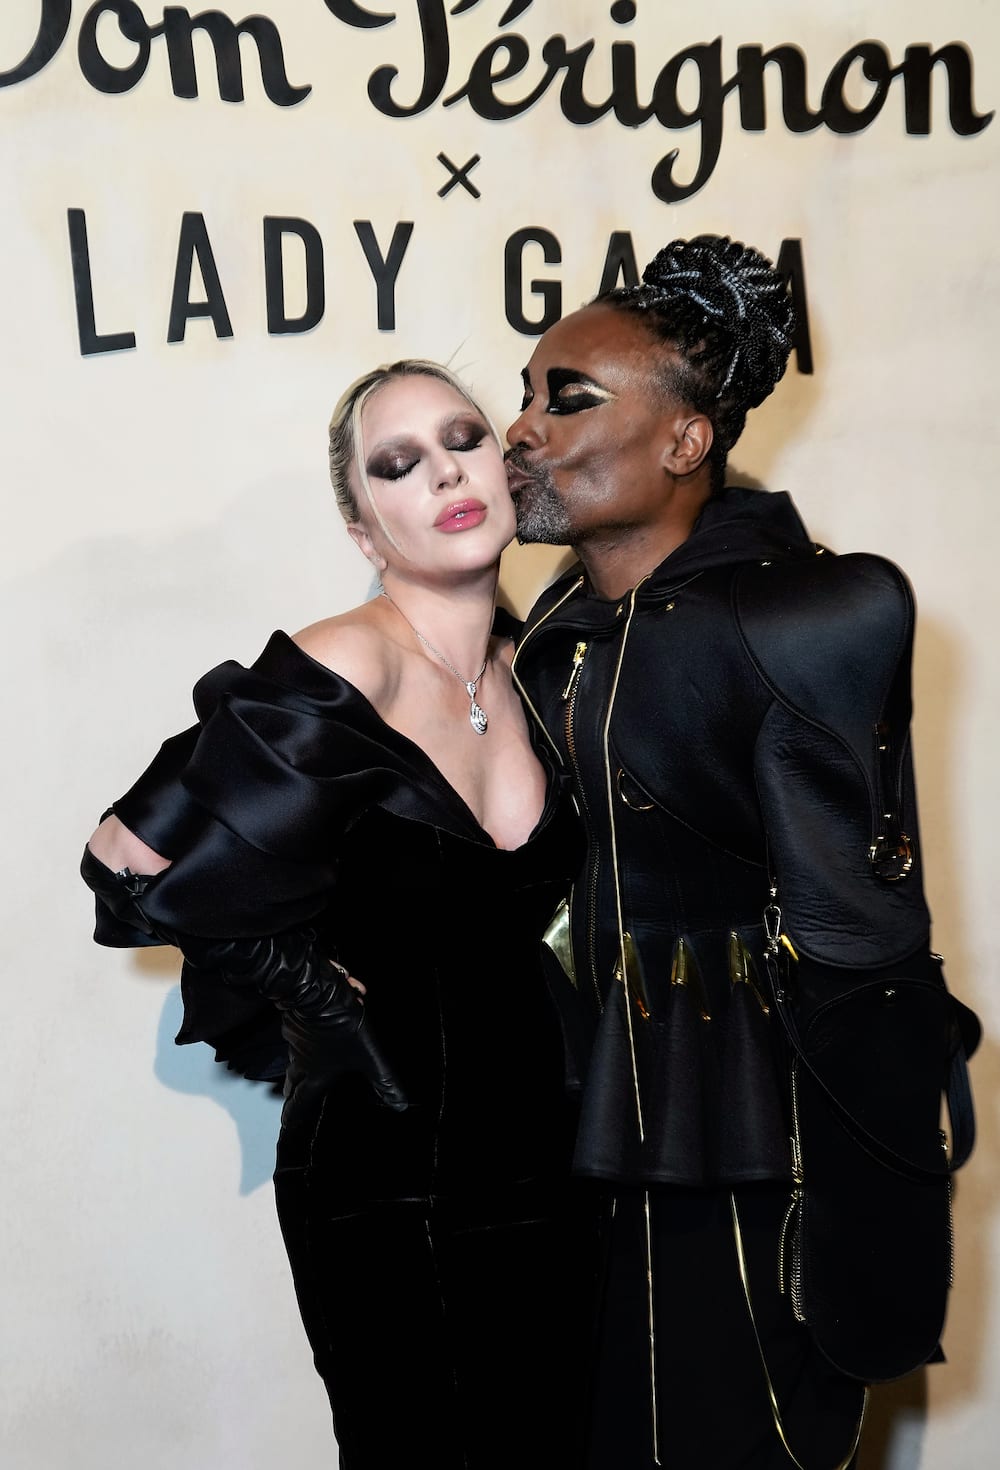 Lady Gaga and Billy Porter make us wonder, "What is Lady Gaga's real gender?"